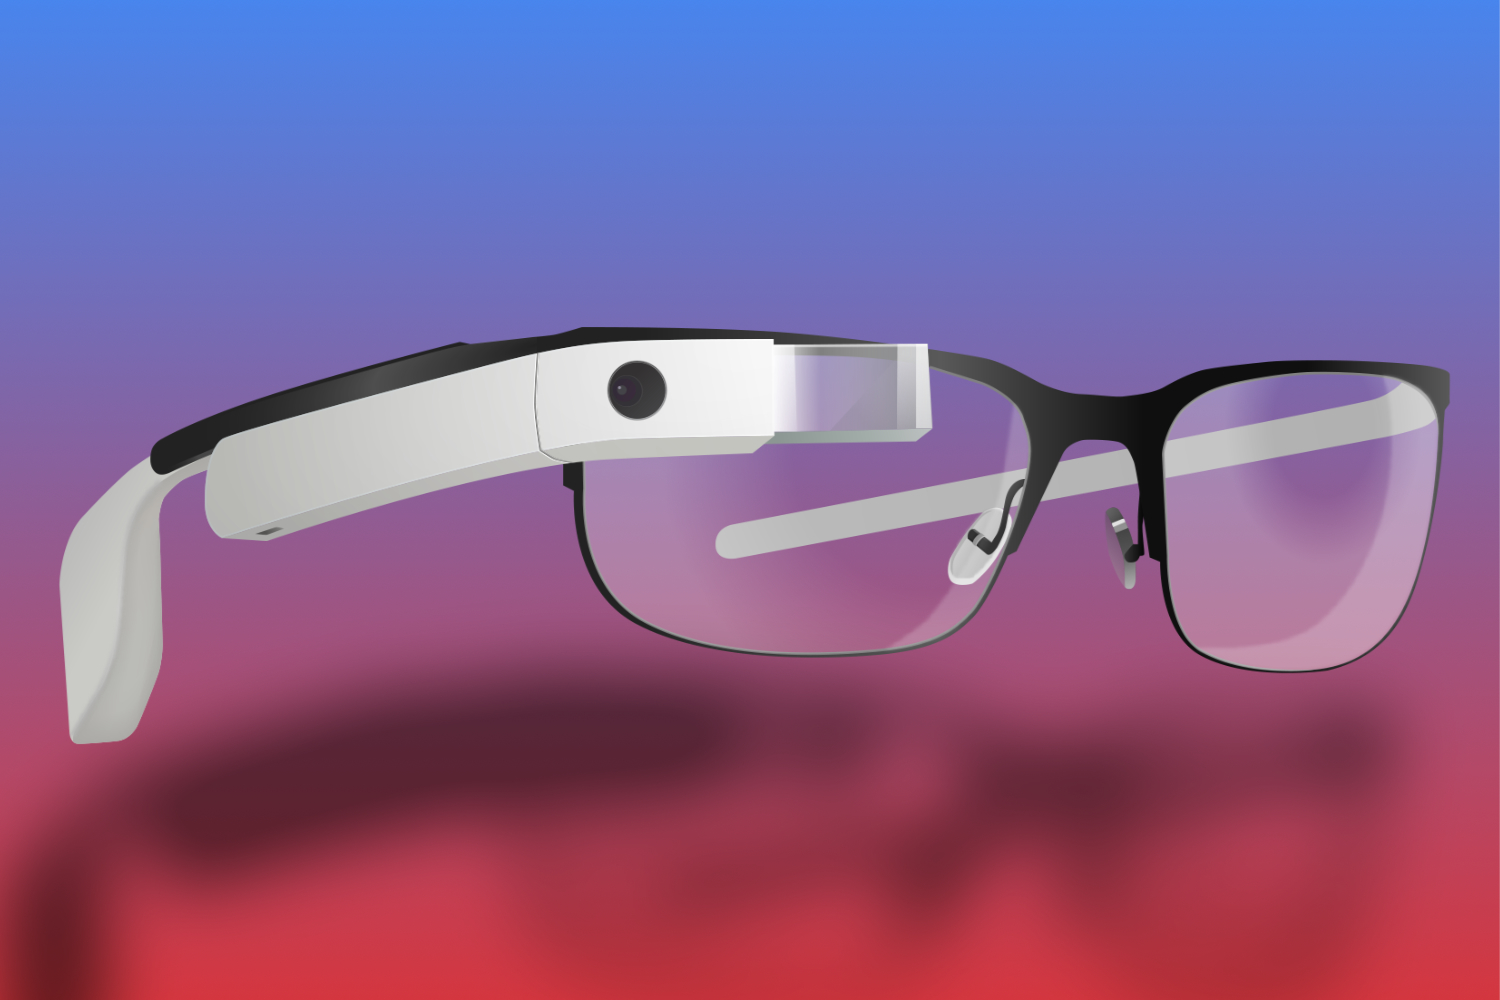 https://www.stuff.tv/wp-content/uploads/sites/2/2022/07/Google-Glass-2-Featured.jpg